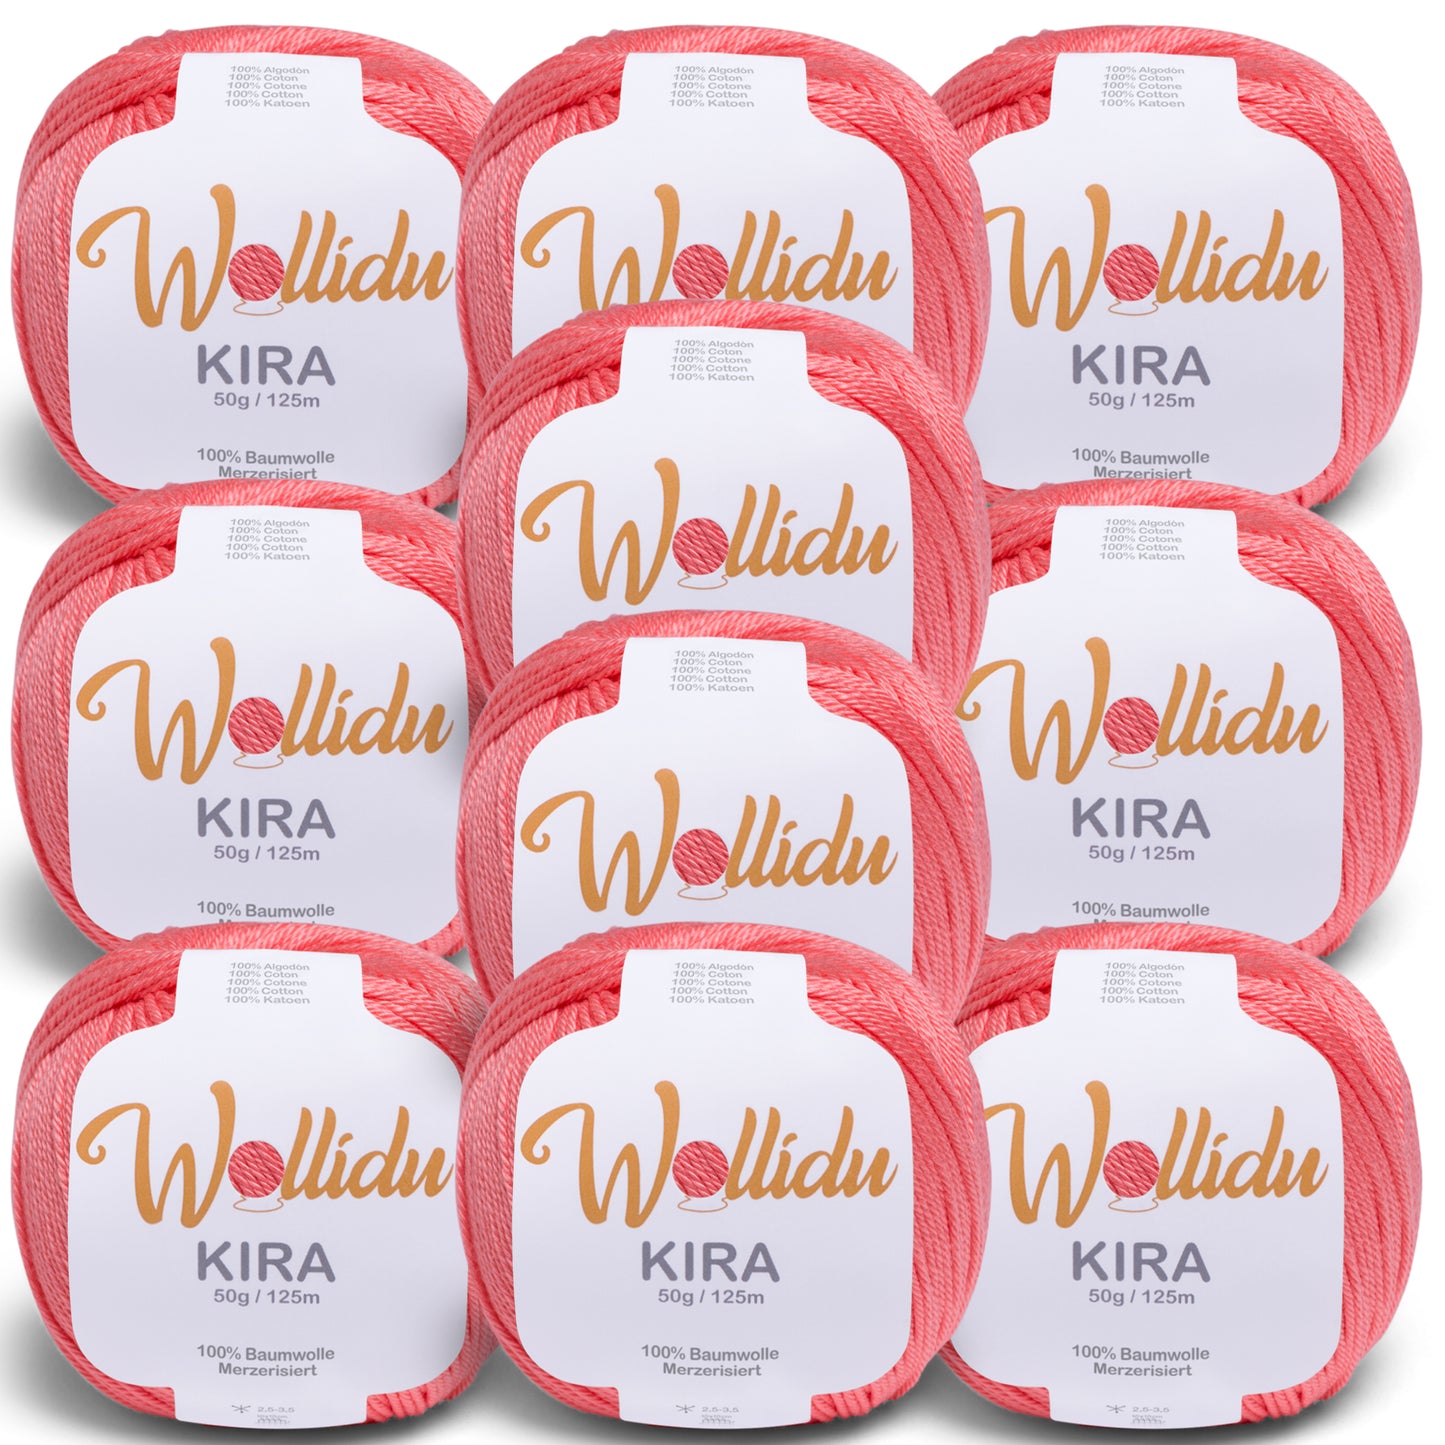 Wollidu Kira 10er Set 100% Baumwolle mercirisiert - 10x 50g Häkelgarn Strickgarn Lachs